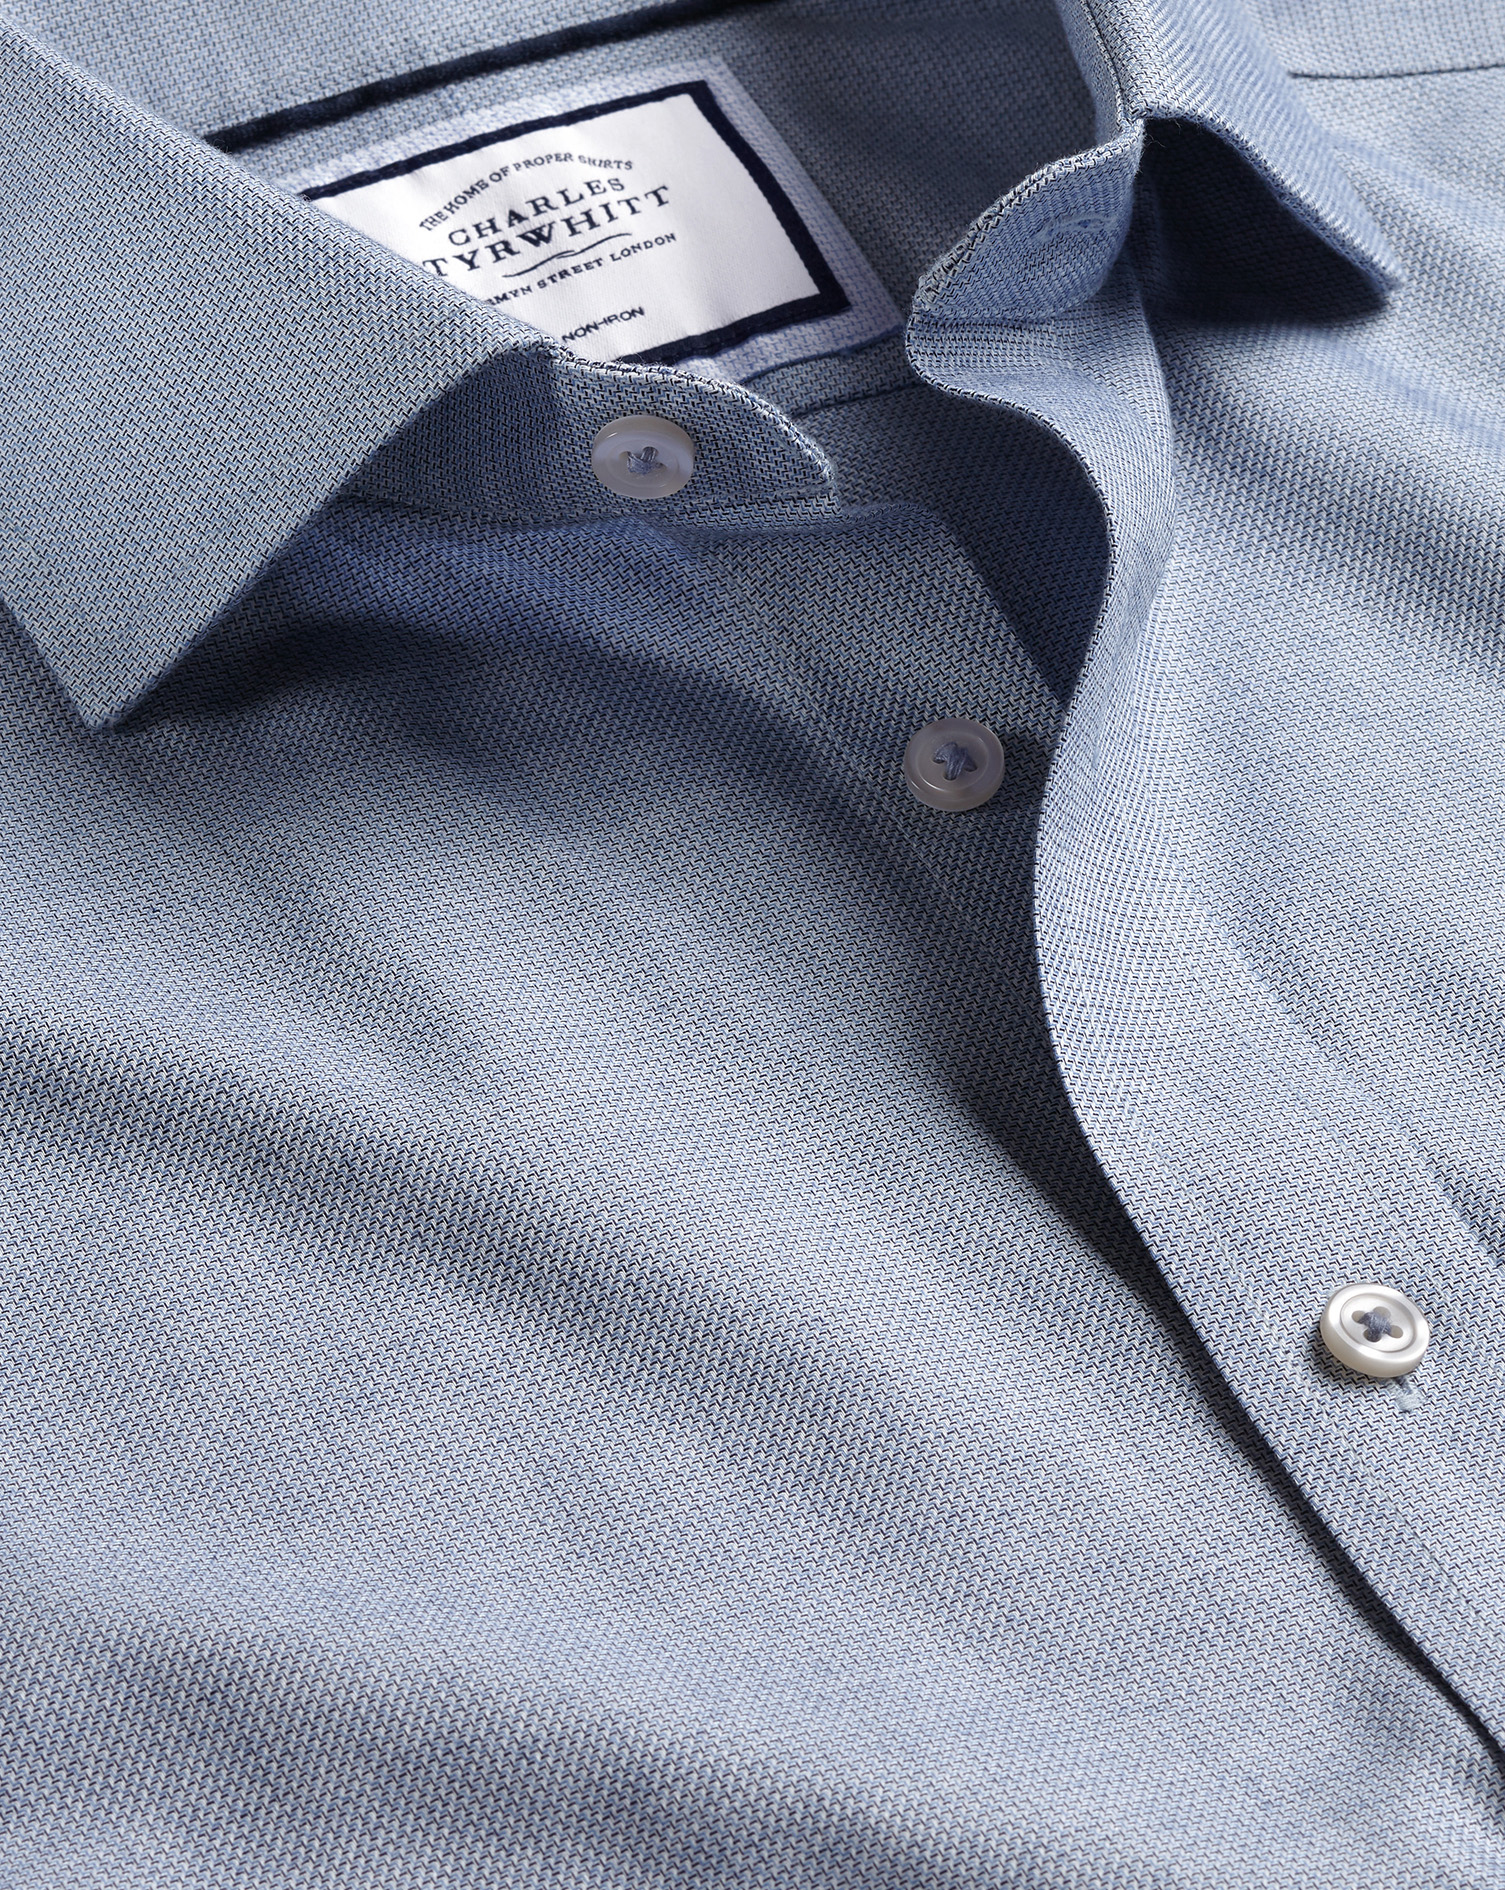 Men's Charles Tyrwhitt Cutaway Collar Non-Iron Richmond Weave Dress Shirt - Indigo Blue Single Cuff 